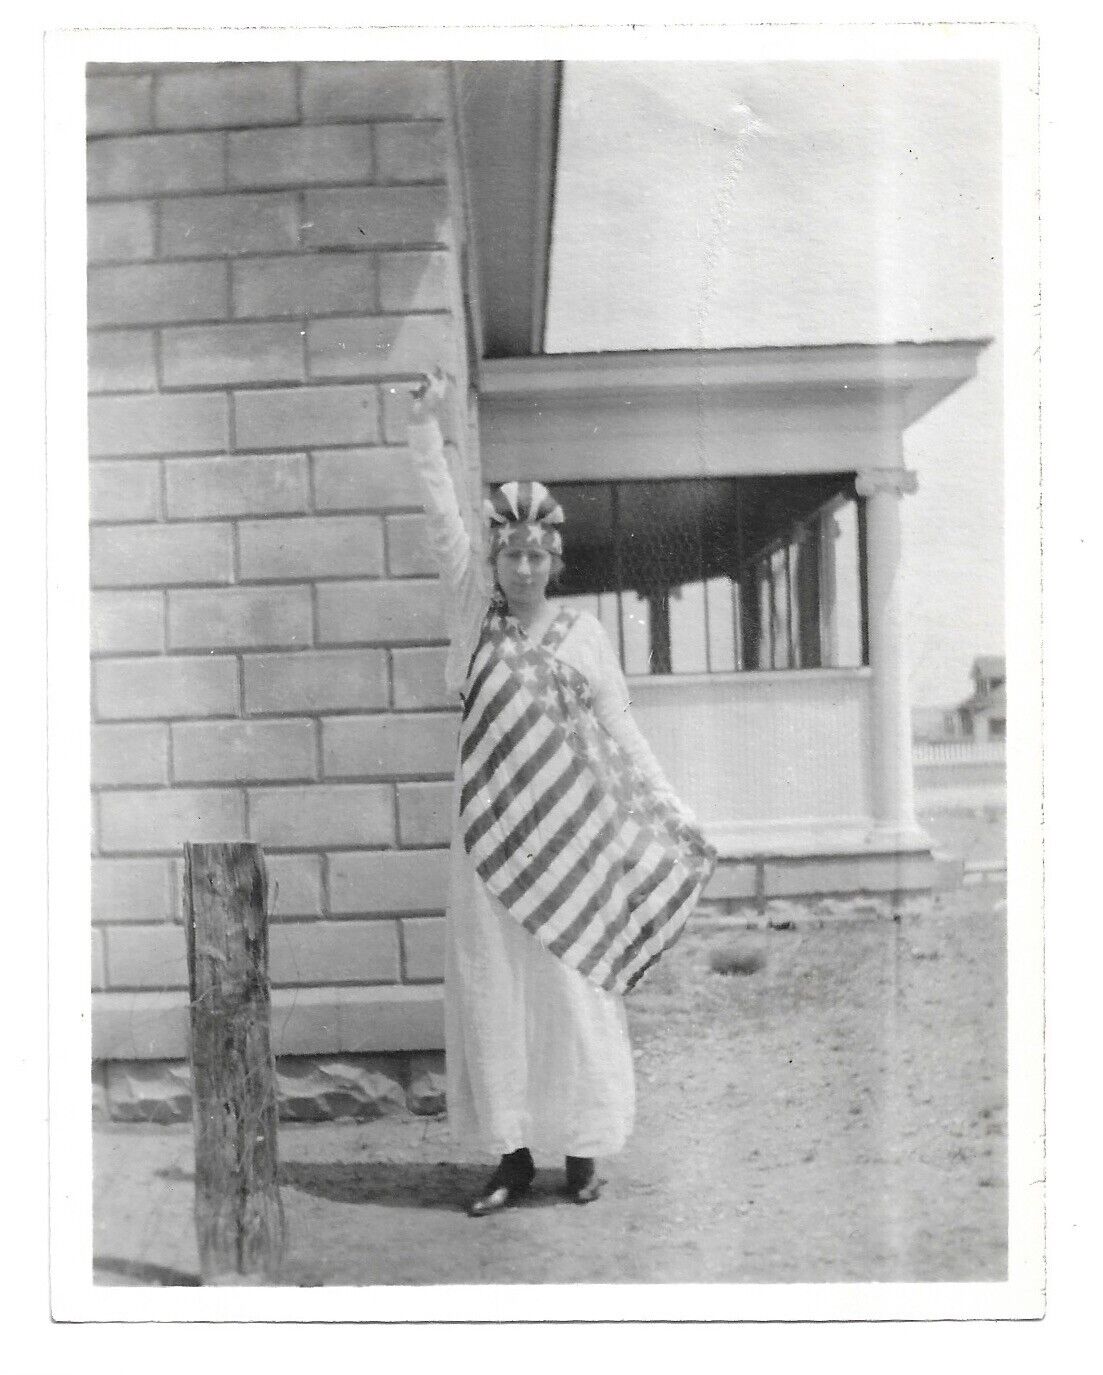 Patriotic Lady Statue Of Liberty Costume, Vintage Snapshot Photo